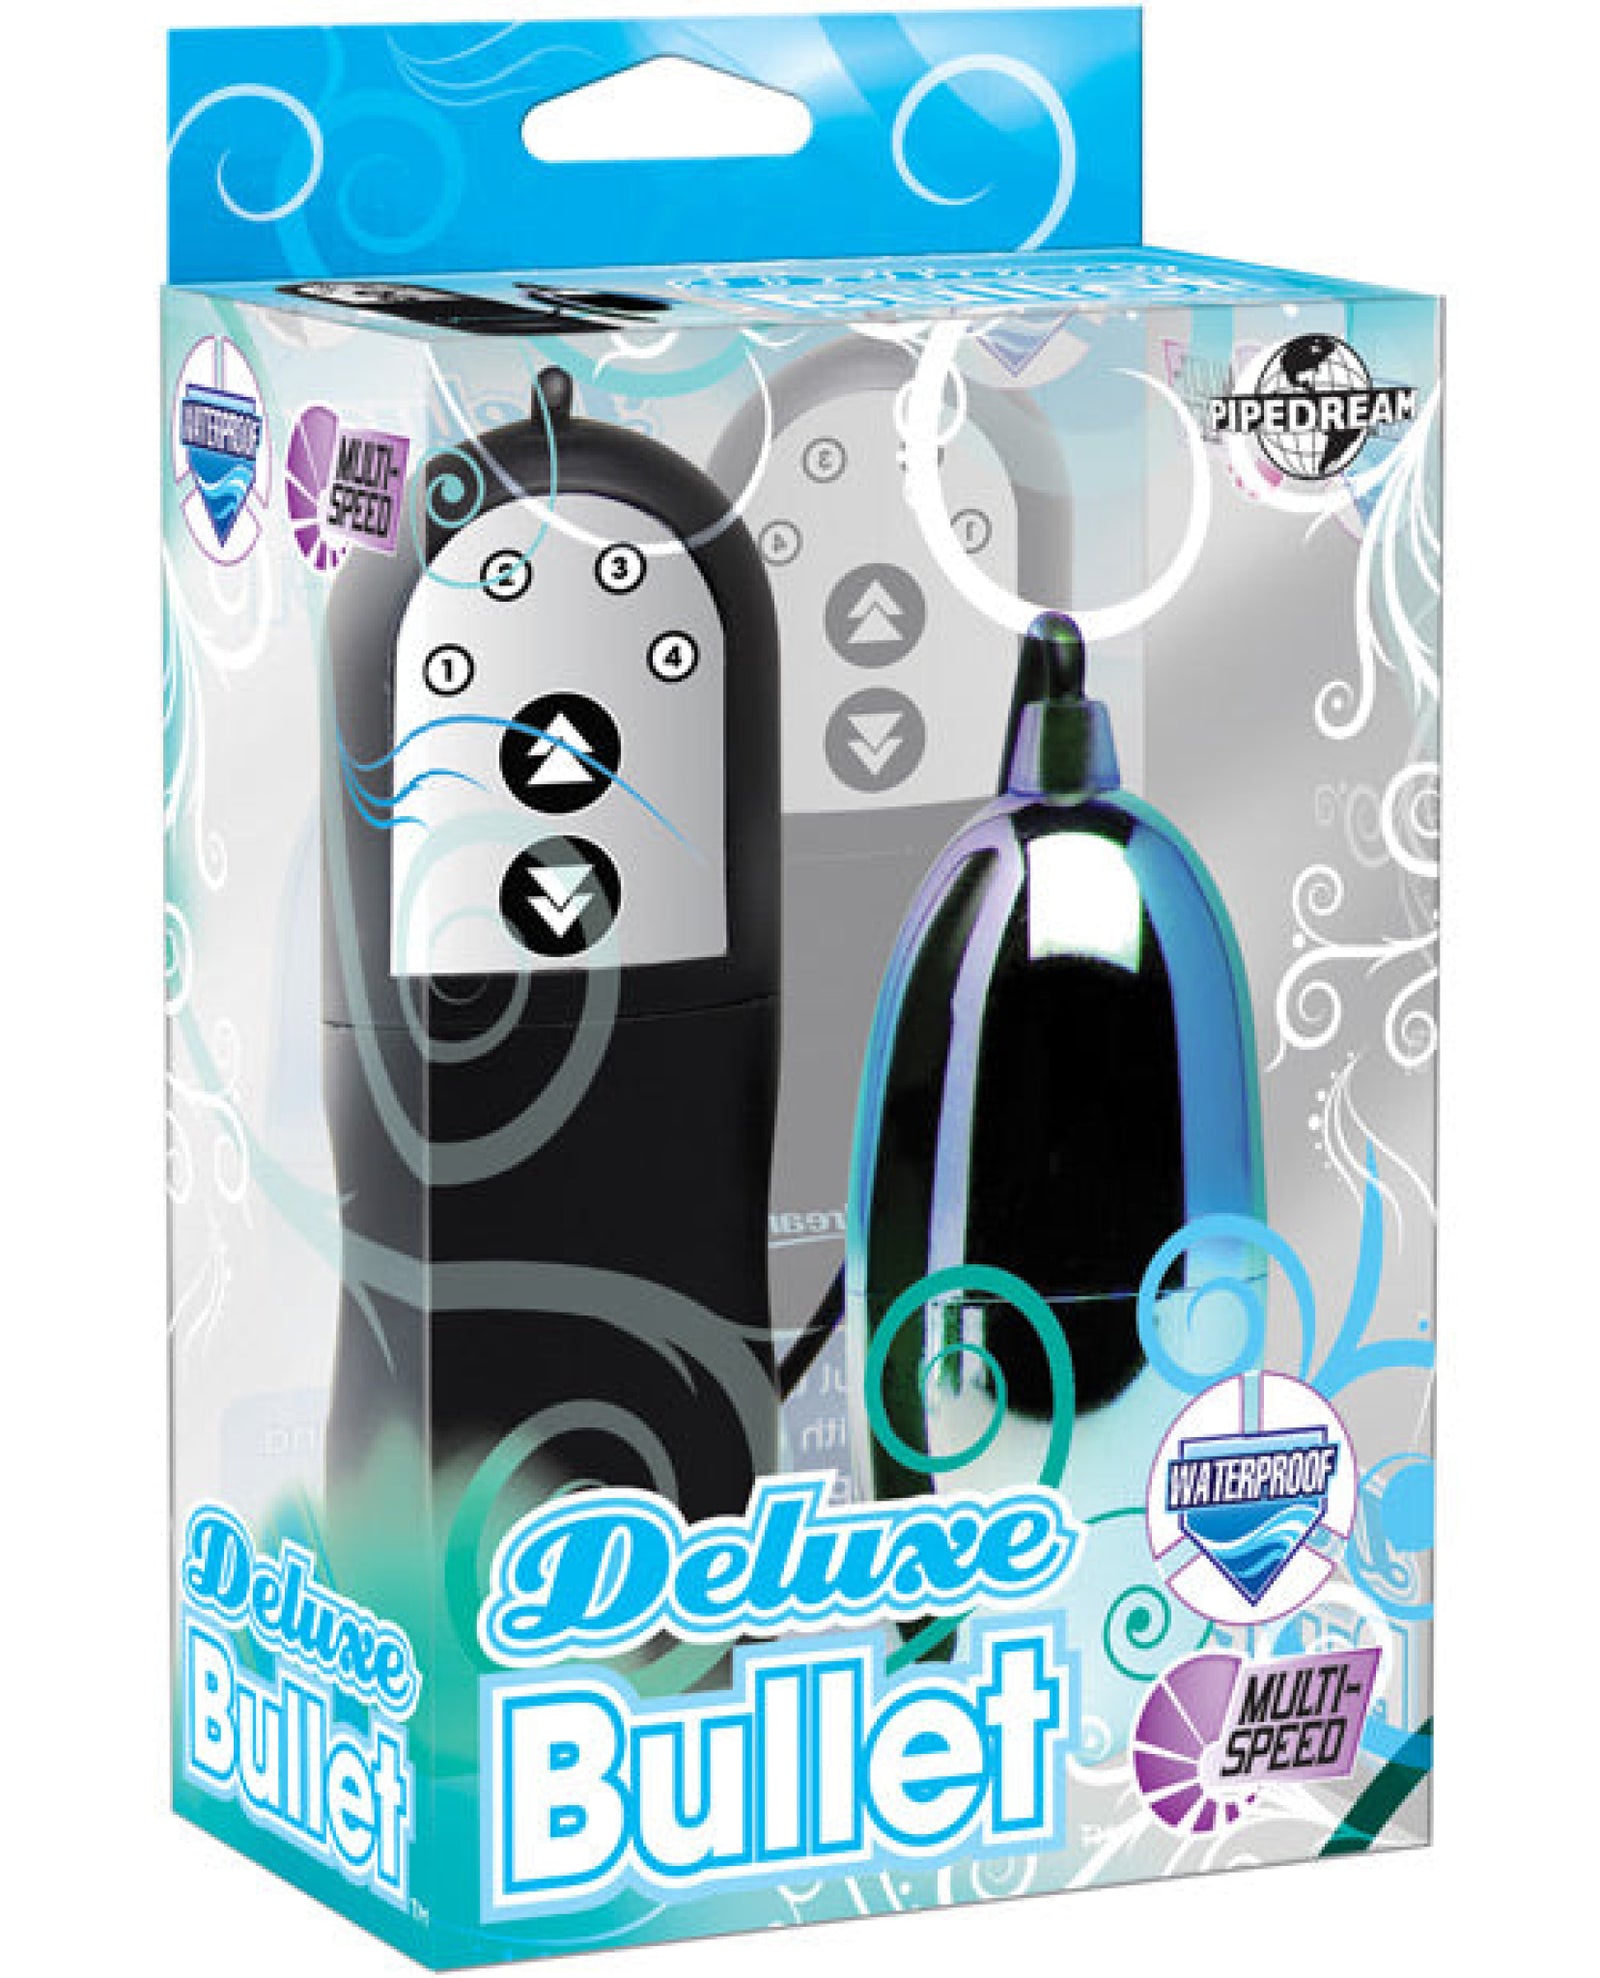 Deluxe Bullet Waterproof Vibe - Mutli-speed Pipedream®